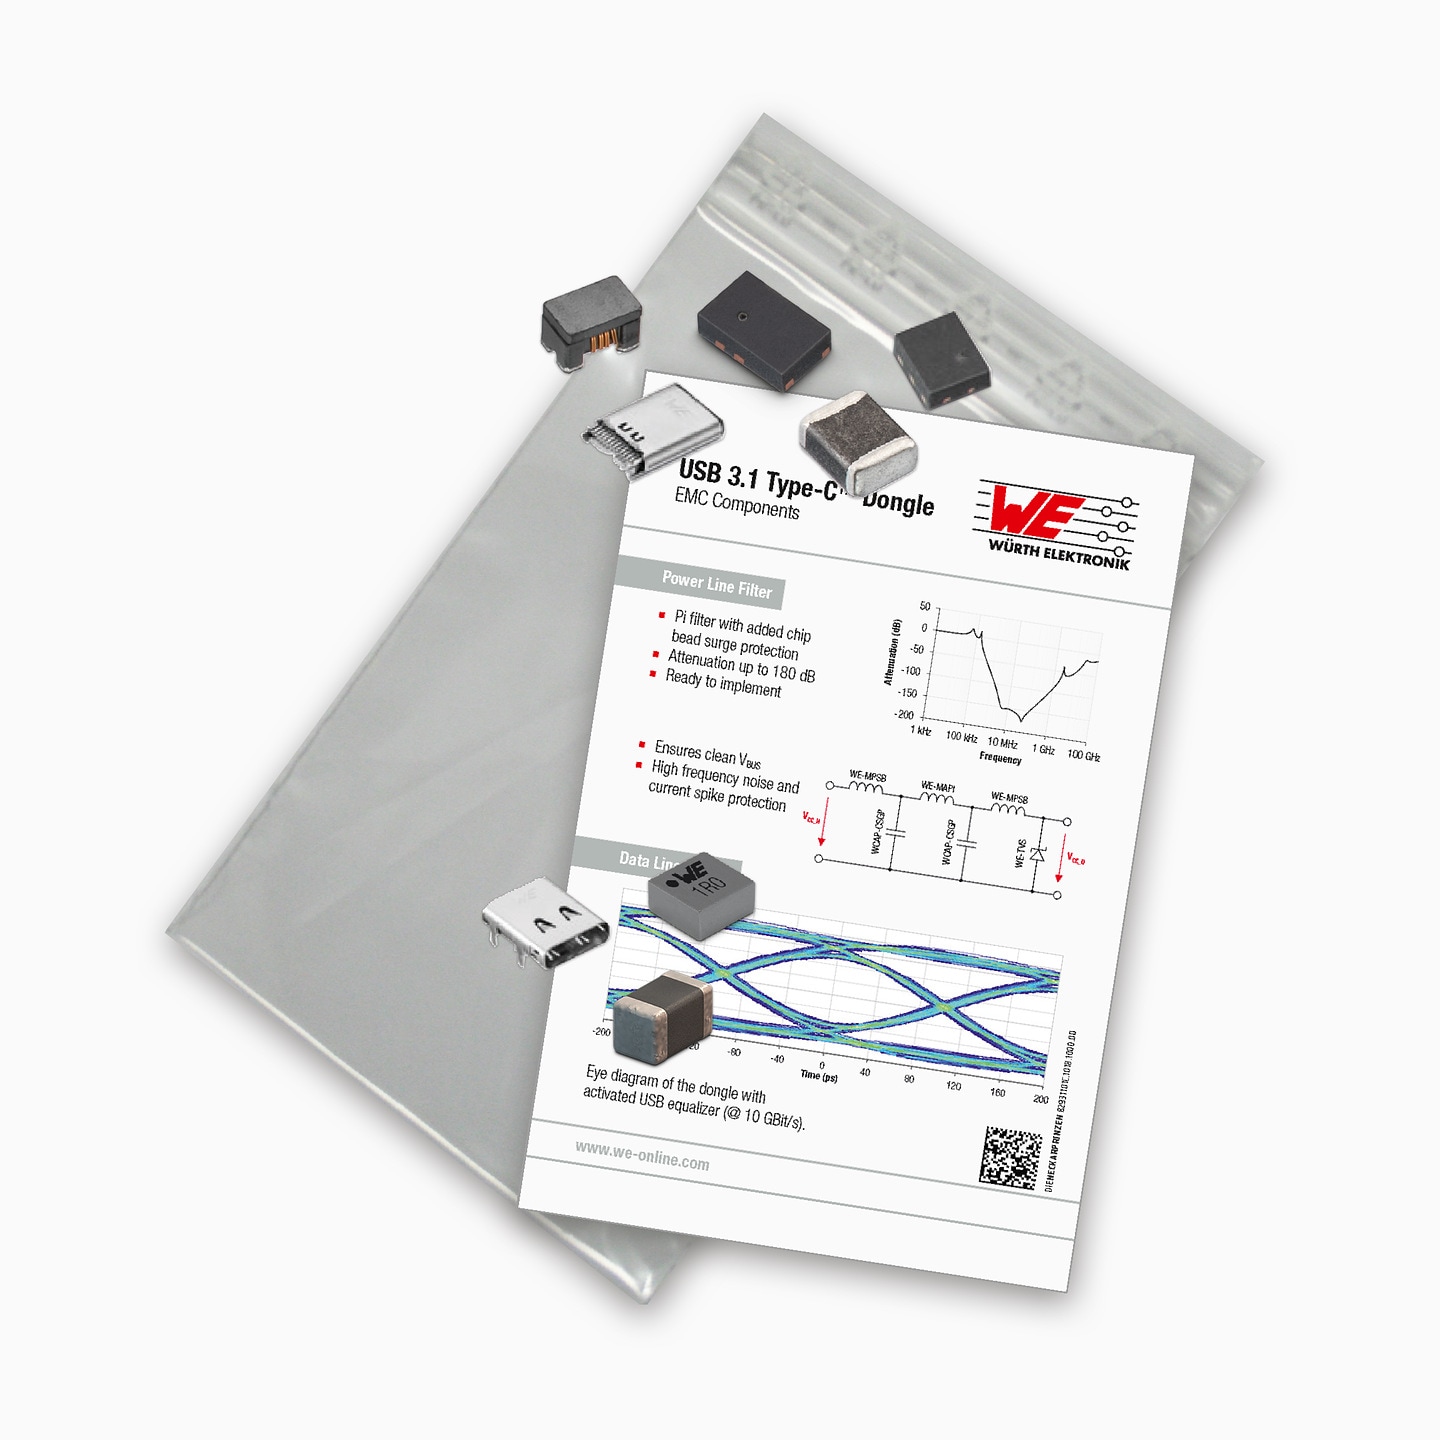 Filter Bag Usb 2 0 Emc Passive Components Wurth Elektronik Product Catalog